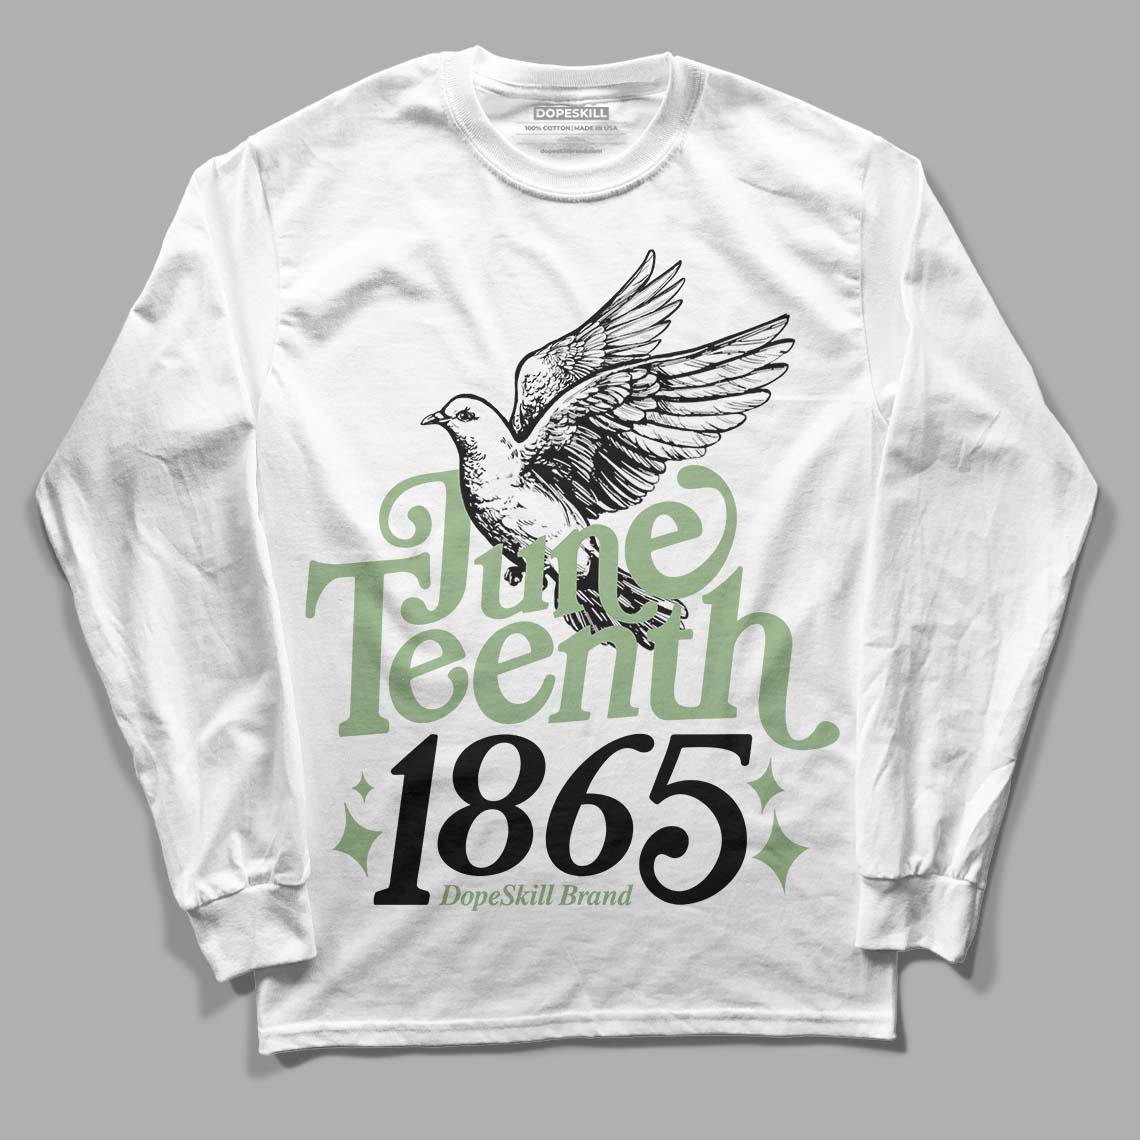 Jordan 4 Retro “Seafoam” DopeSkill Long Sleeve T-Shirt Juneteenth 1865 Graphic Streetwear - White